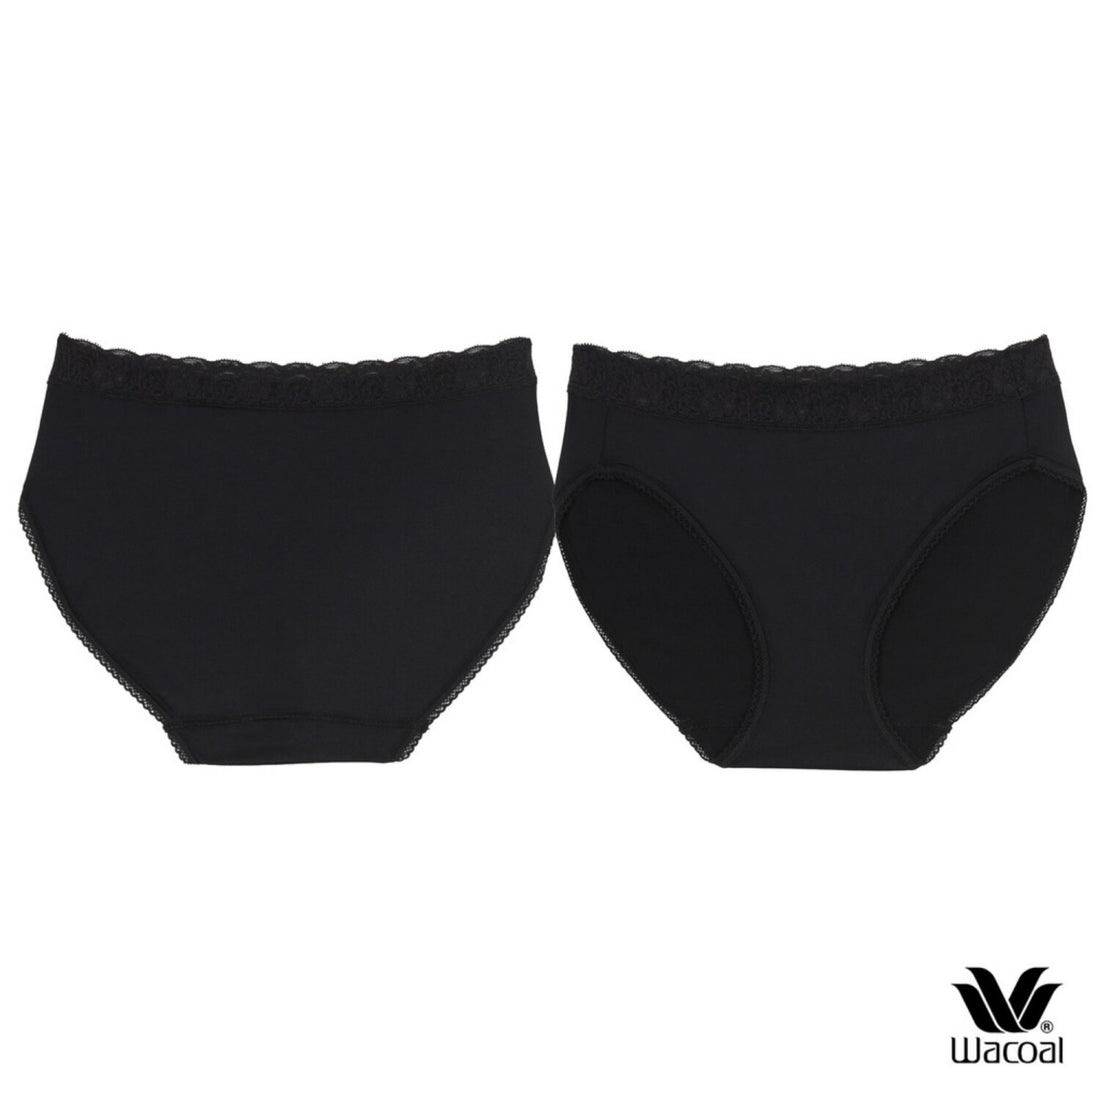 Wacoal Panty pack, comfortable underwear Bikini set 3 pieces, model WU1T35, assorted colors (beige-black-cream)